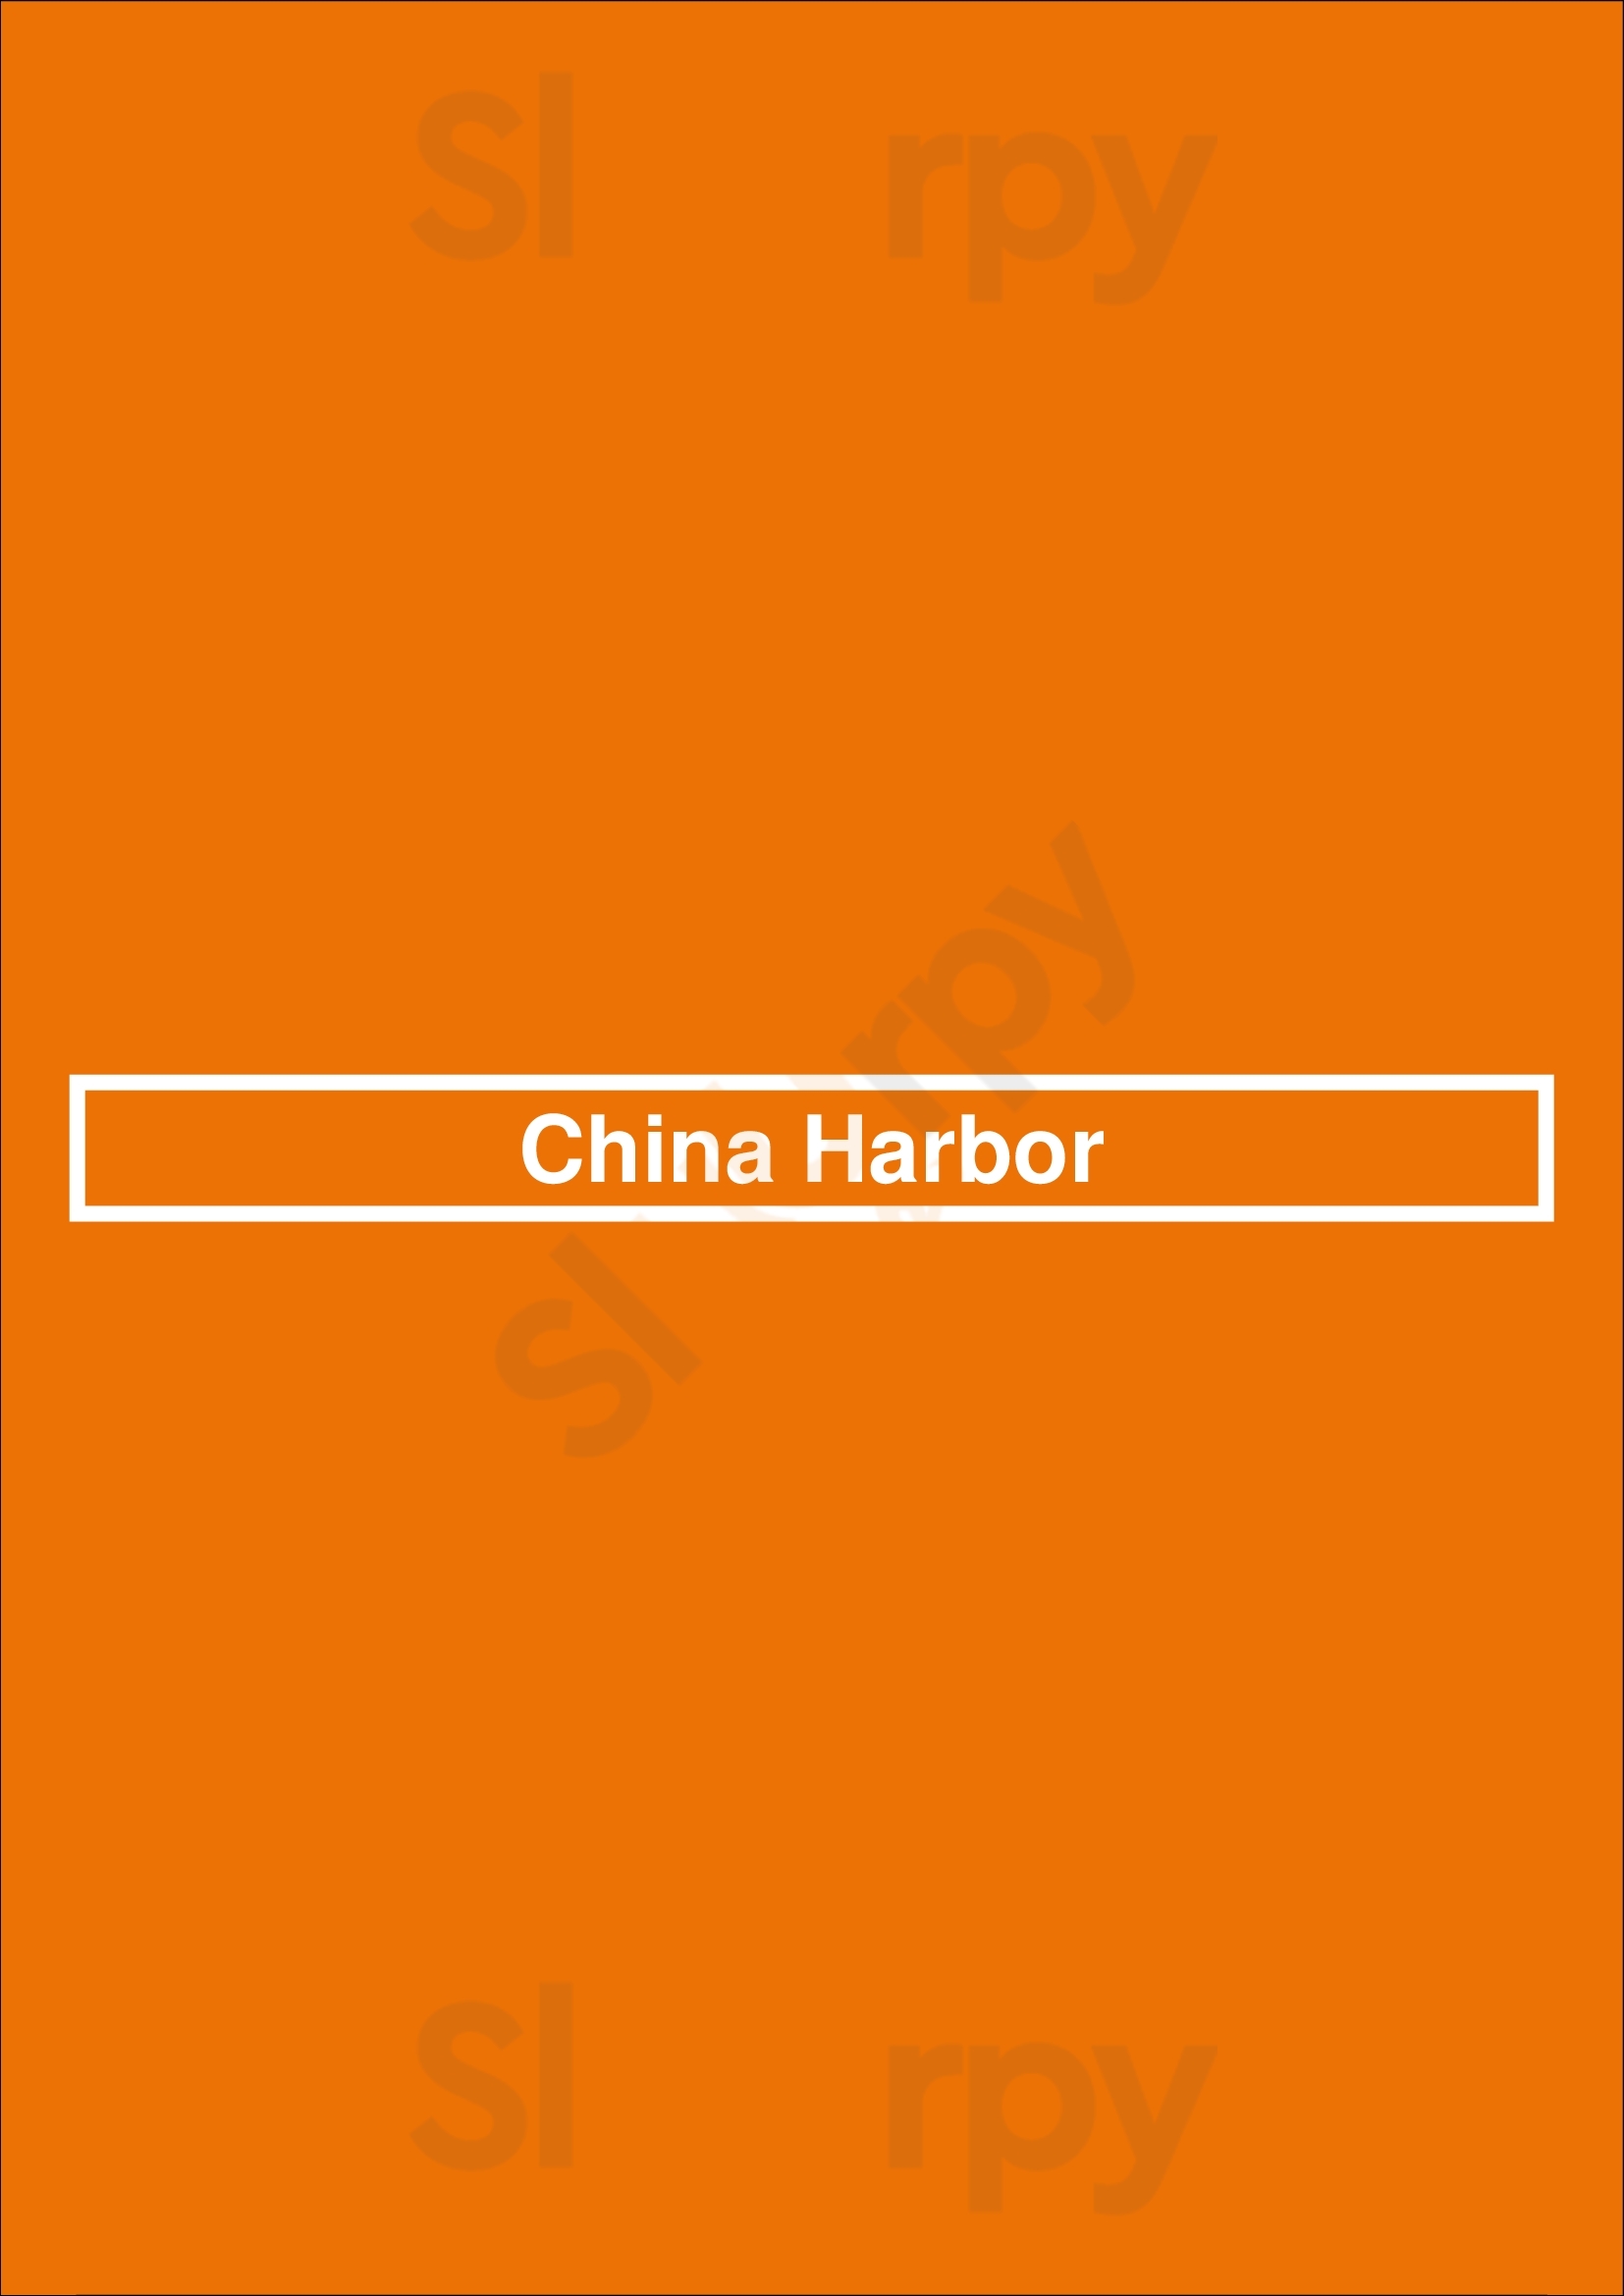 China Harbor Seattle Menu - 1